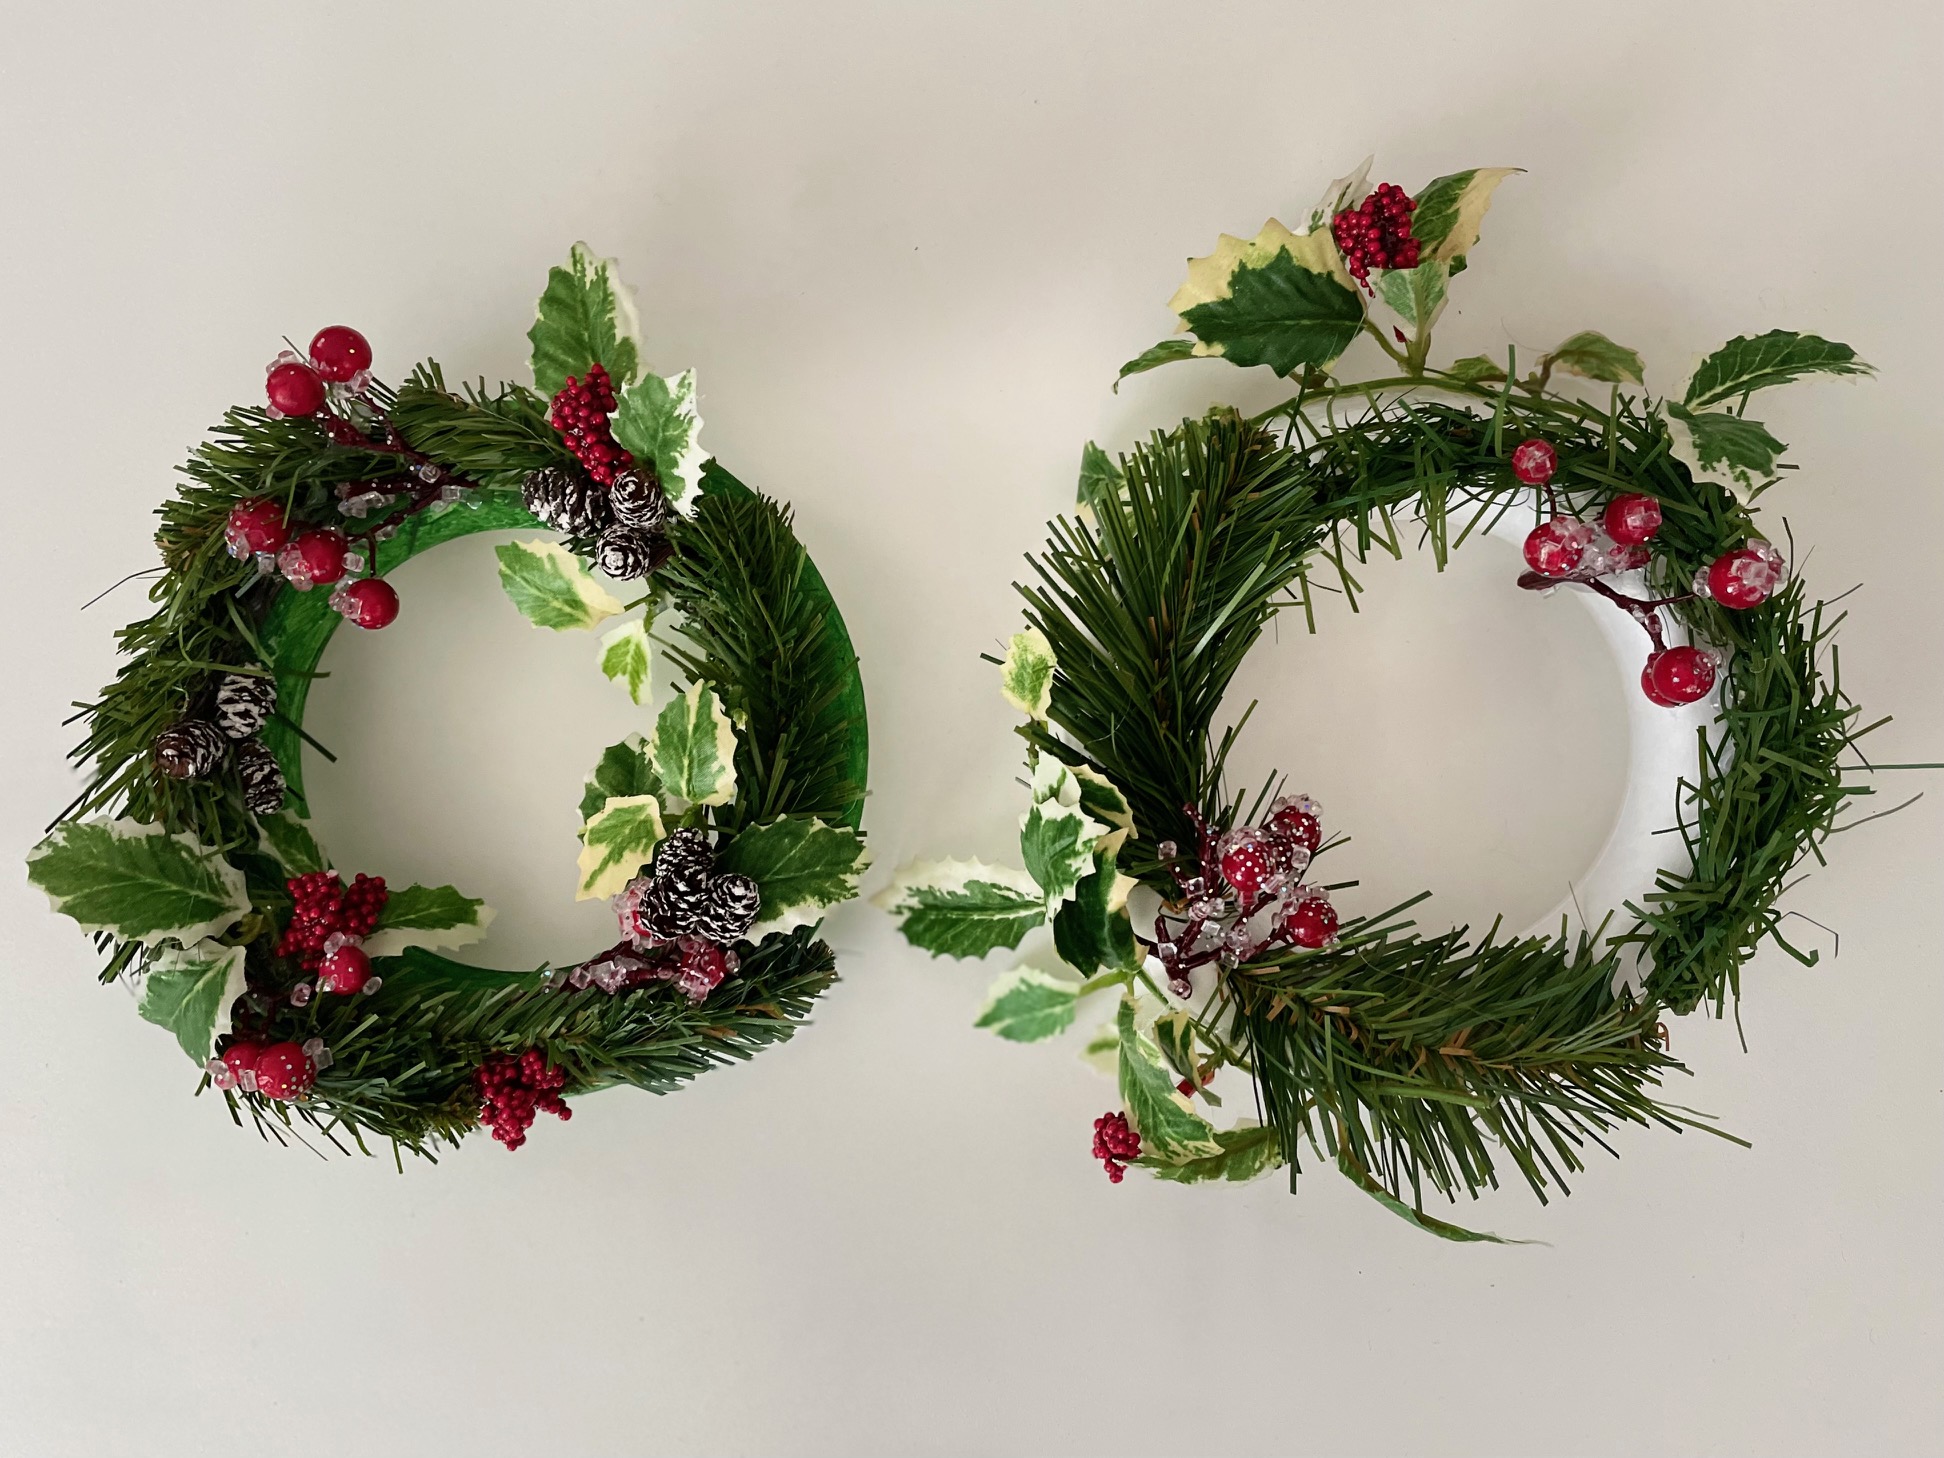 How to Make a Wreath Frame - DIY Cardboard Wreath Base